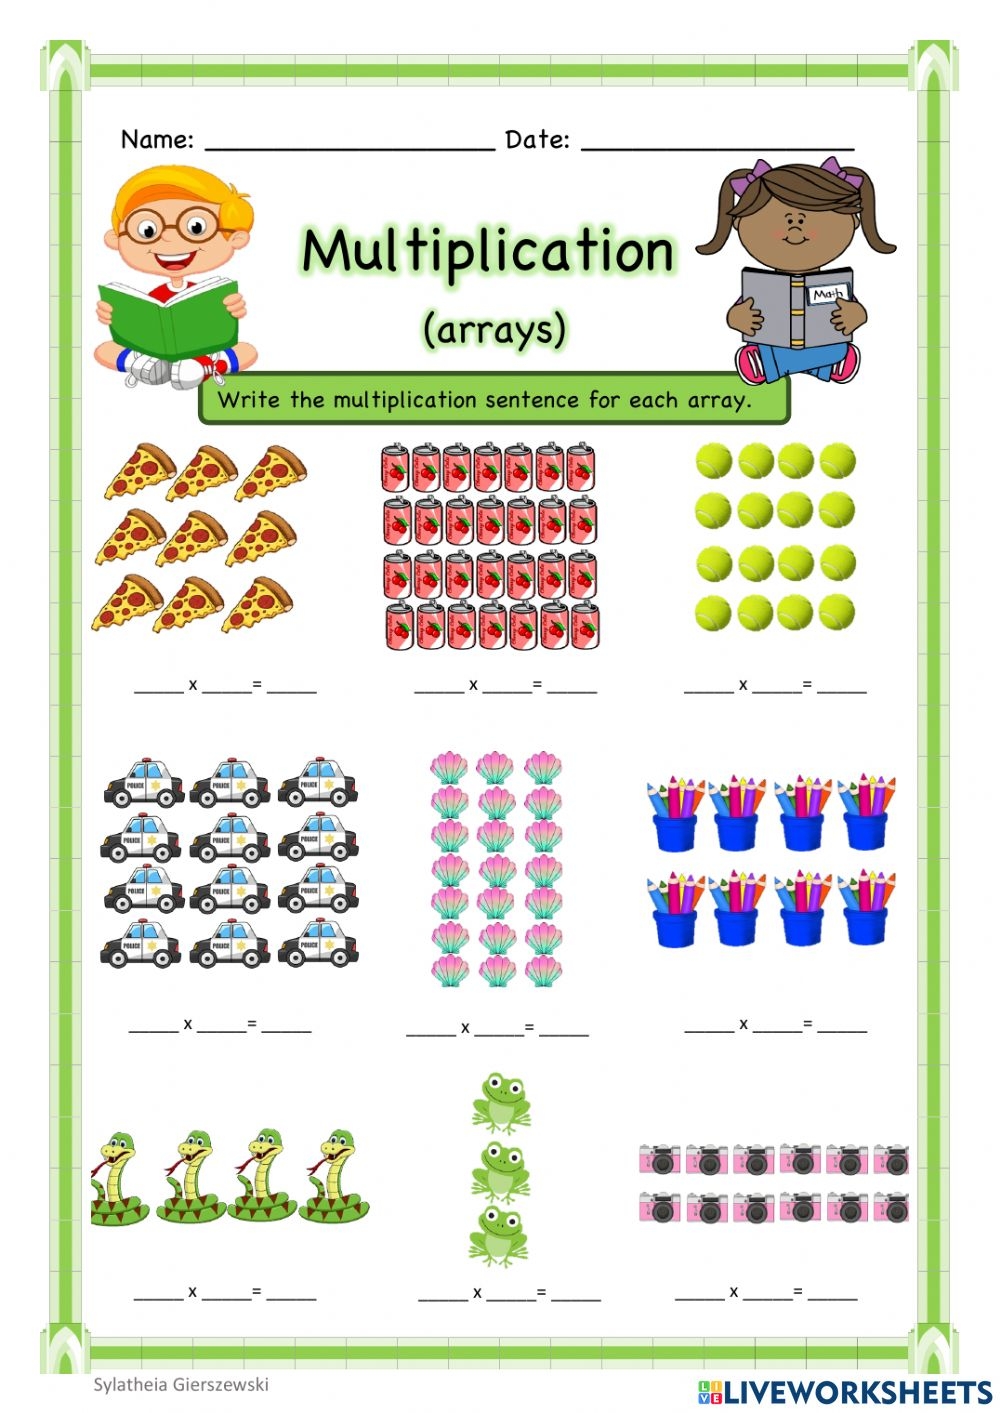 Multiplication arrays Interactive Worksheet